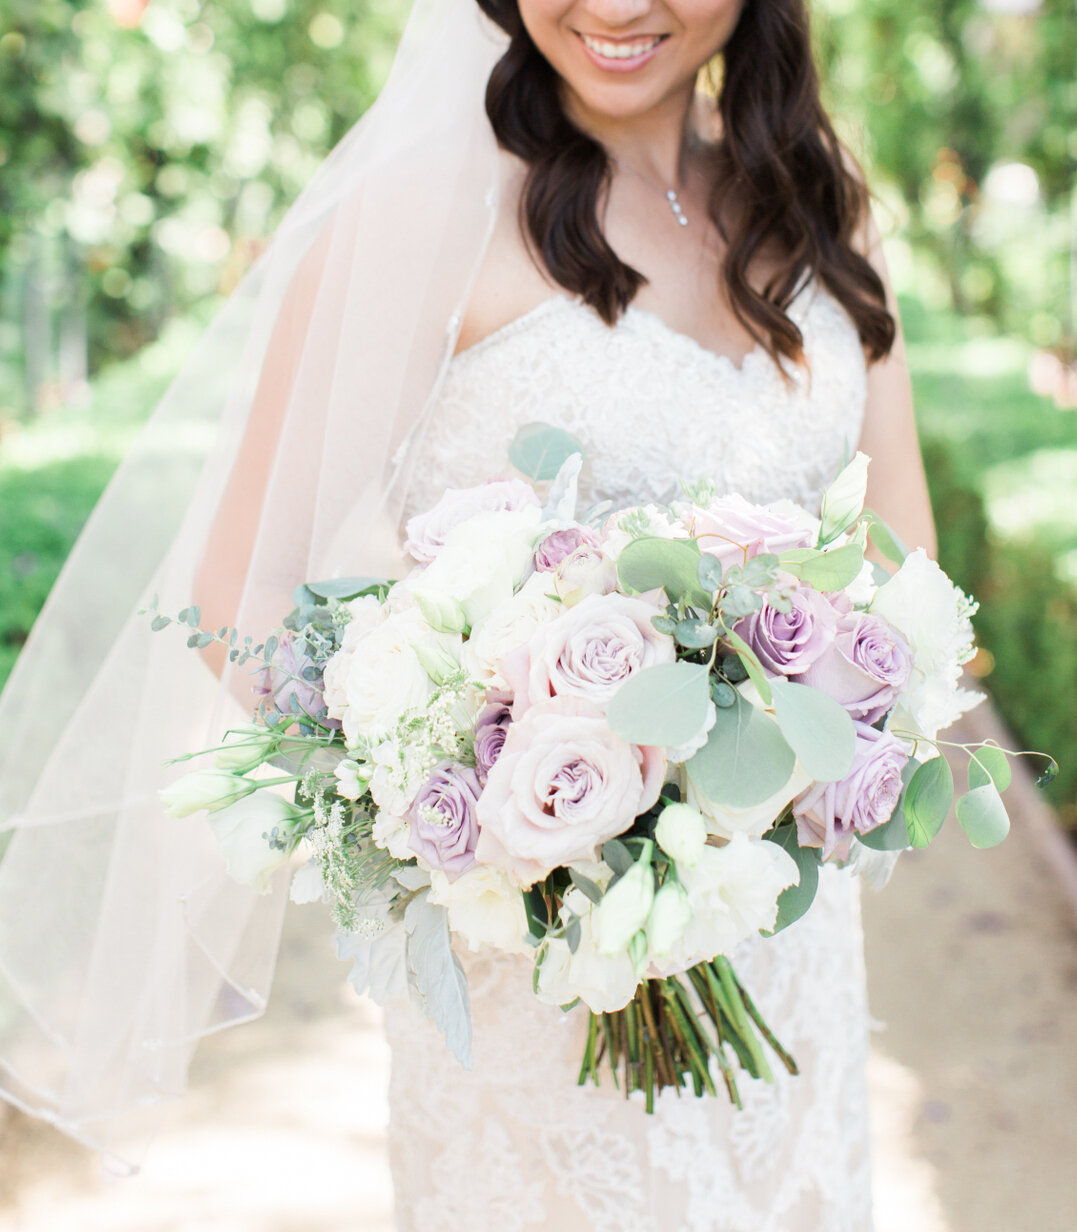 Classic white with a touch of lavender 💜⠀⠀⠀⠀⠀⠀⠀⠀⠀
.⠀⠀⠀⠀⠀⠀⠀⠀⠀
.⠀⠀⠀⠀⠀⠀⠀⠀⠀
Wedding Planner: @trinaschmidtweddings⠀⠀⠀⠀⠀⠀⠀⠀⠀⠀⠀⠀⠀⠀⠀⠀⠀
Photographer: @wisteriaphotography⠀⠀⠀⠀⠀⠀⠀⠀⠀
Venue: @westlakevillageinn⠀⠀⠀⠀⠀⠀⠀⠀⠀
Florals: @uniquefloraldesigns